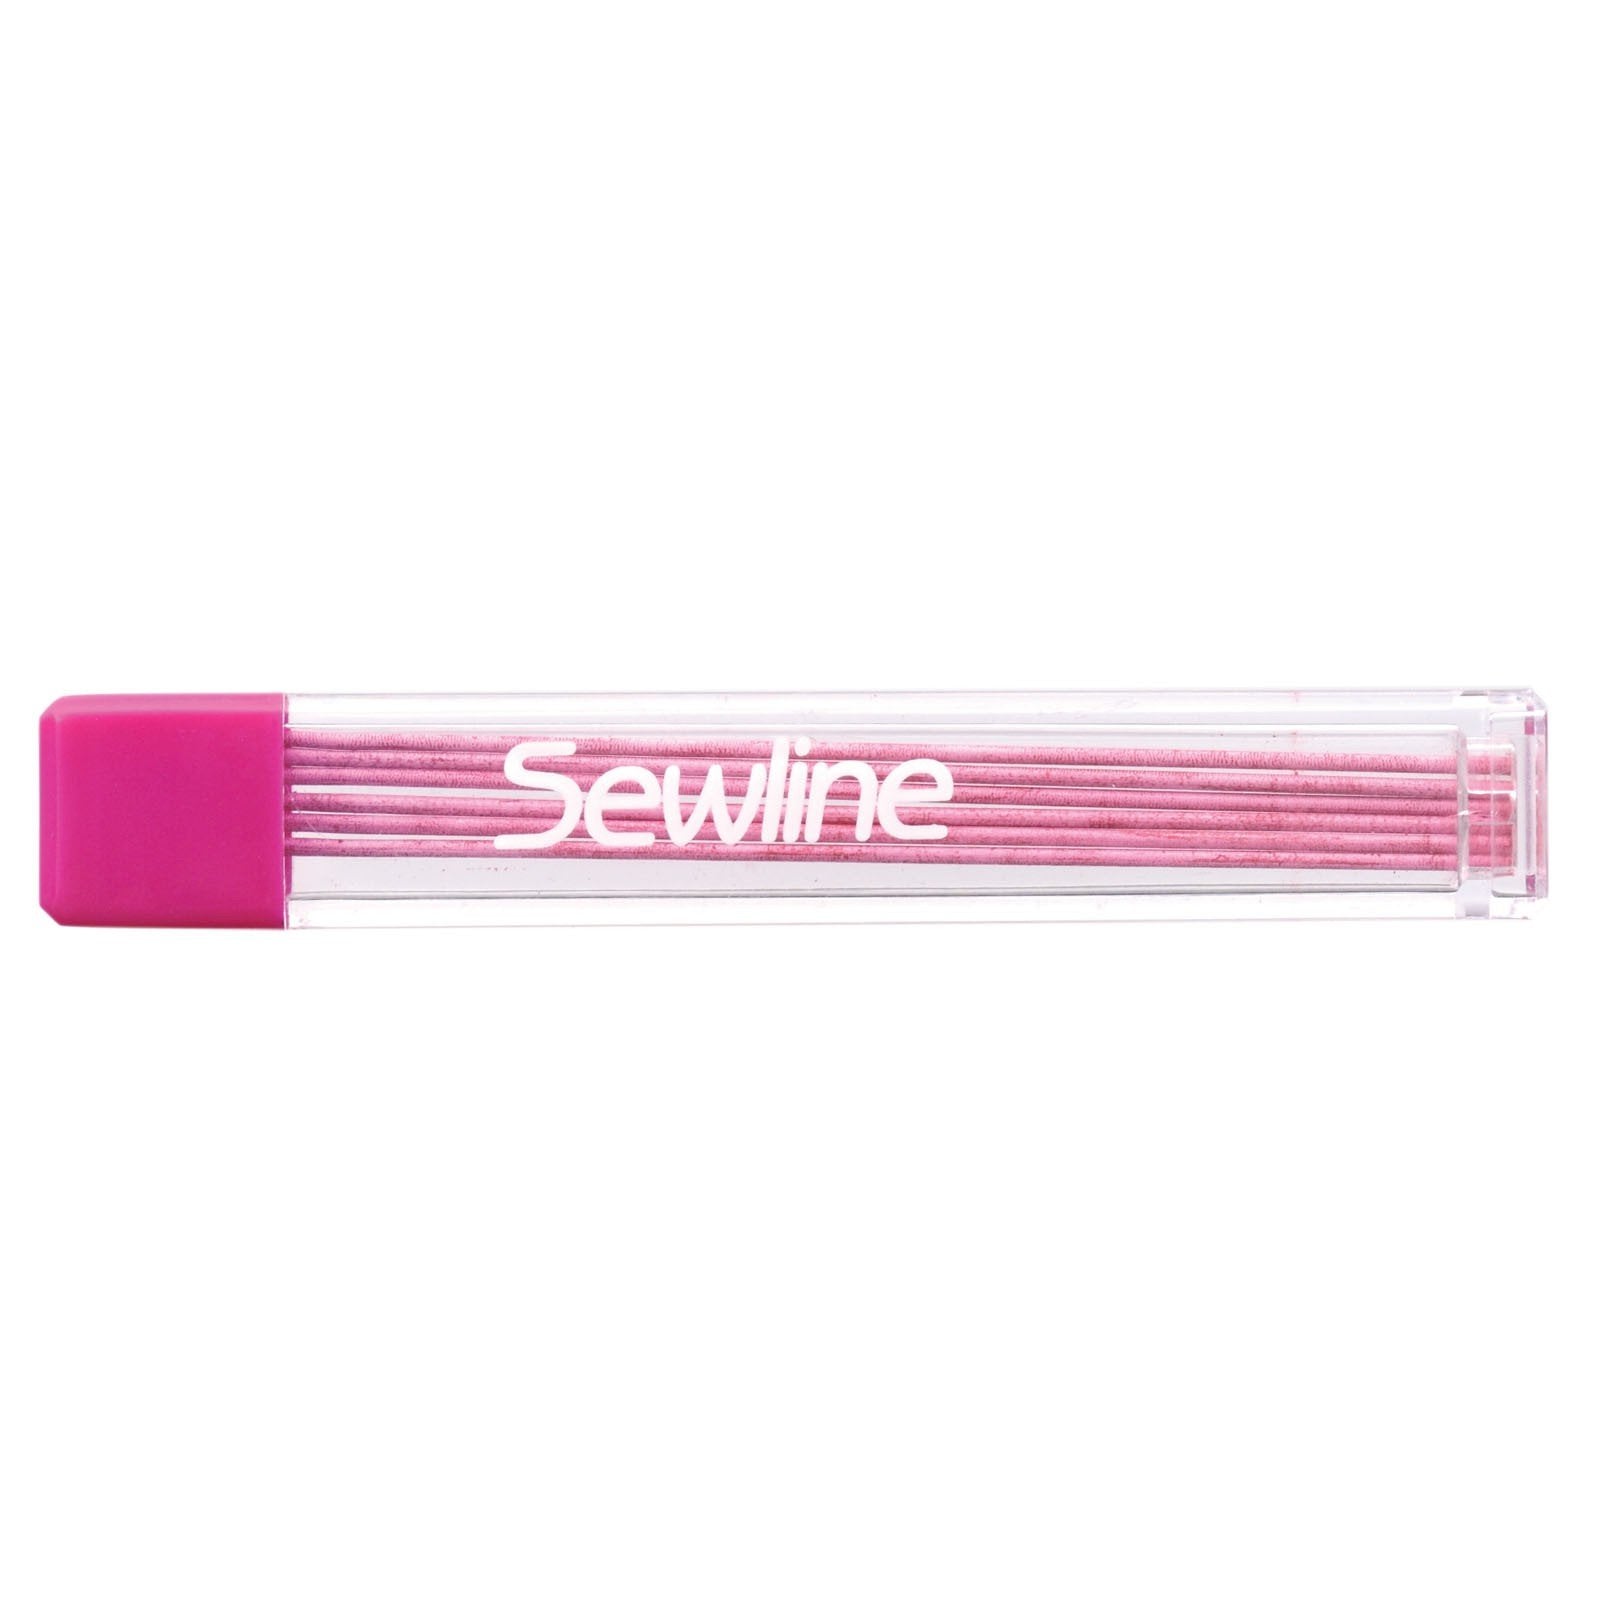 Sewline - Fabric Pencil 